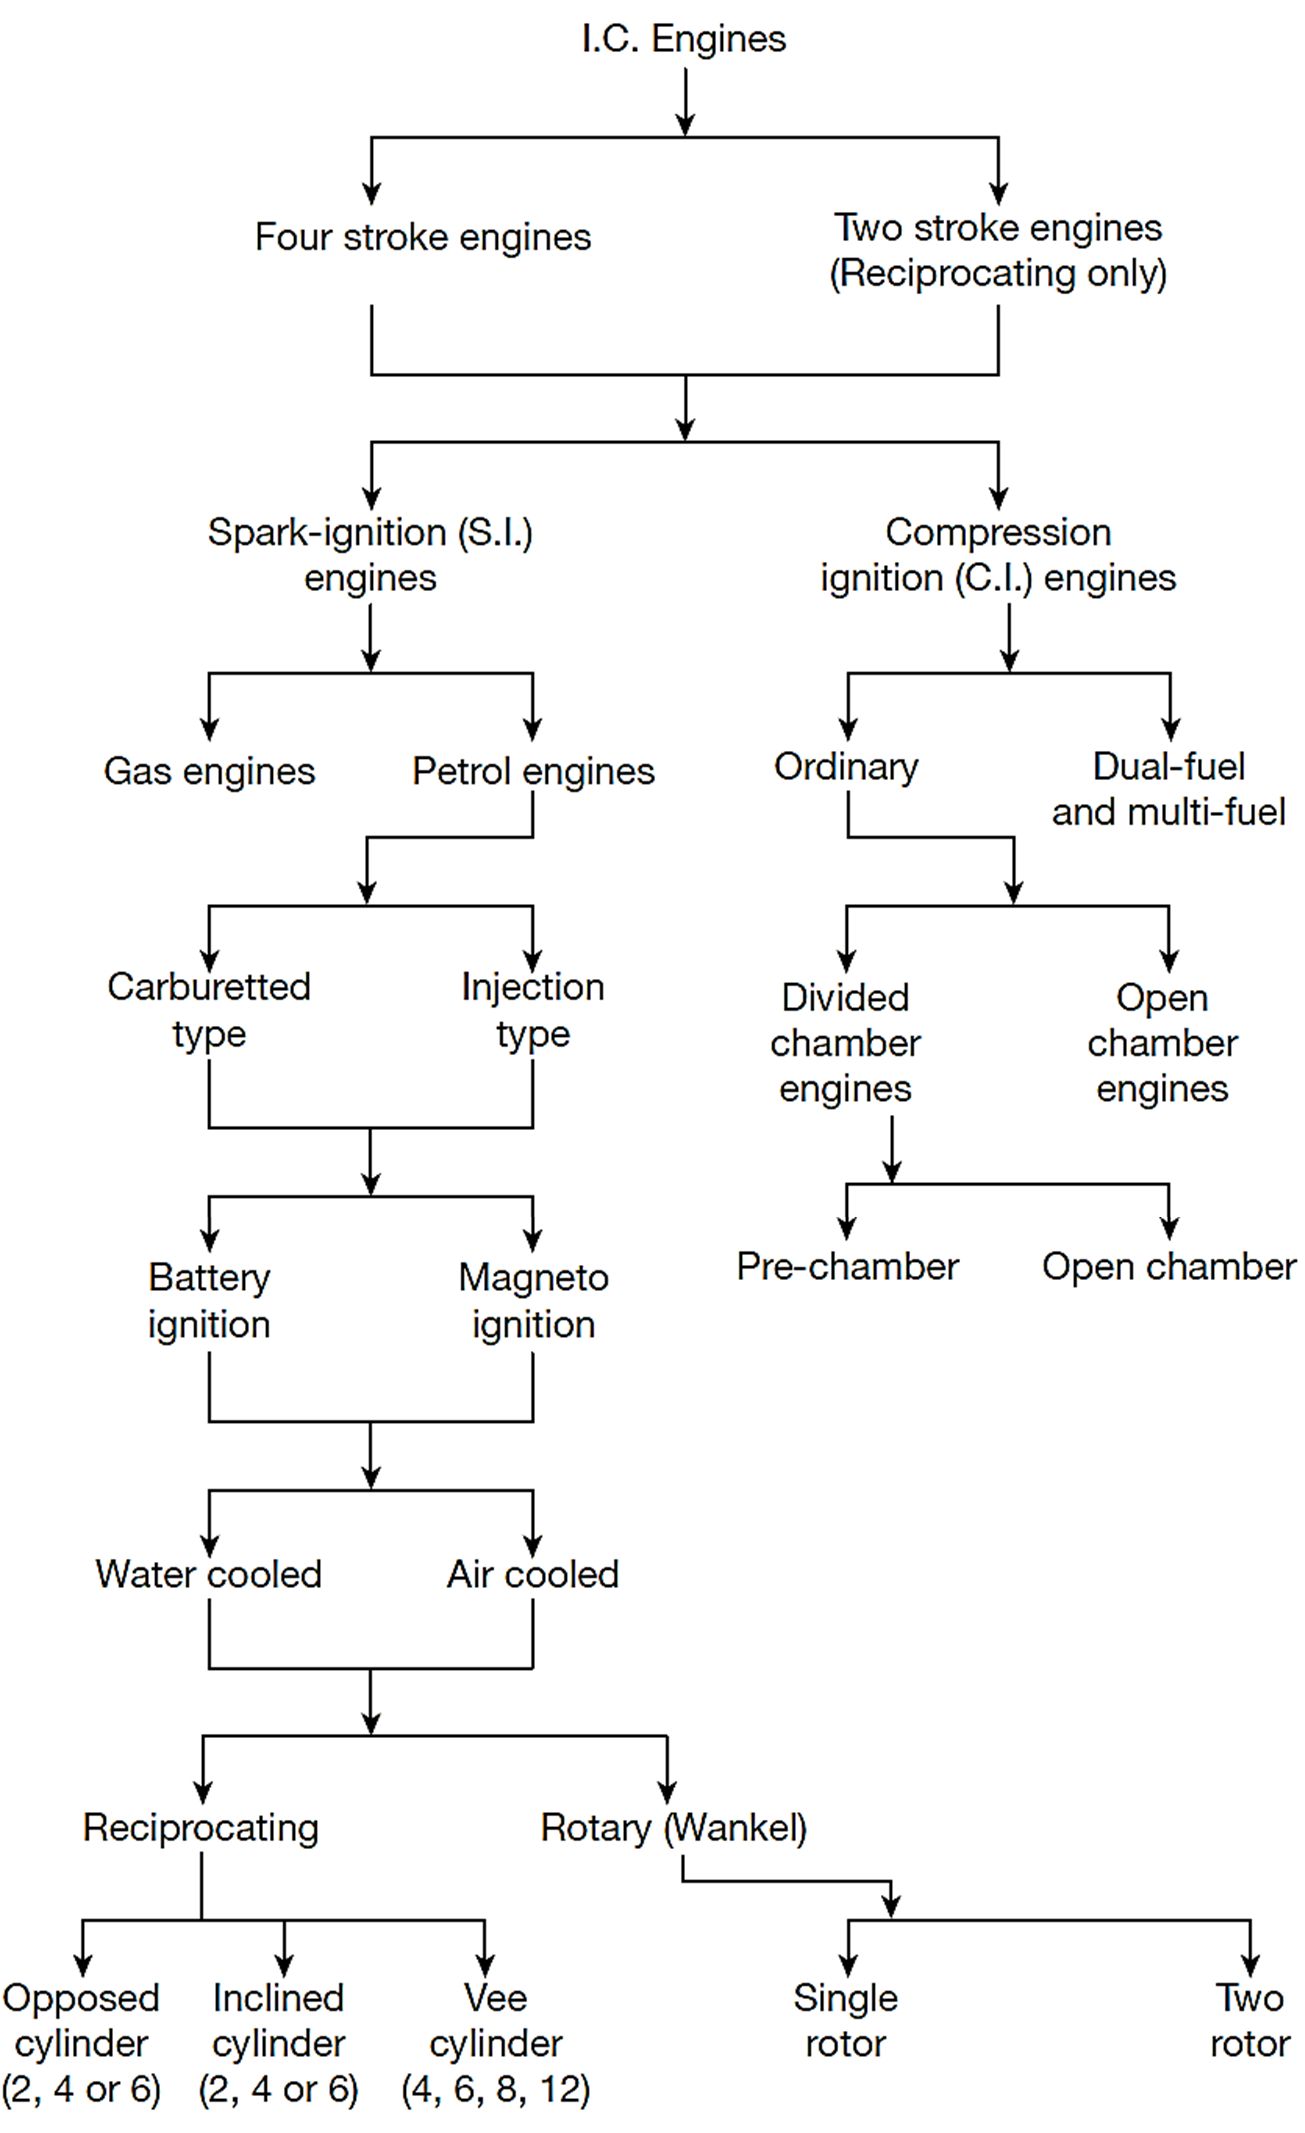 IC engine classification